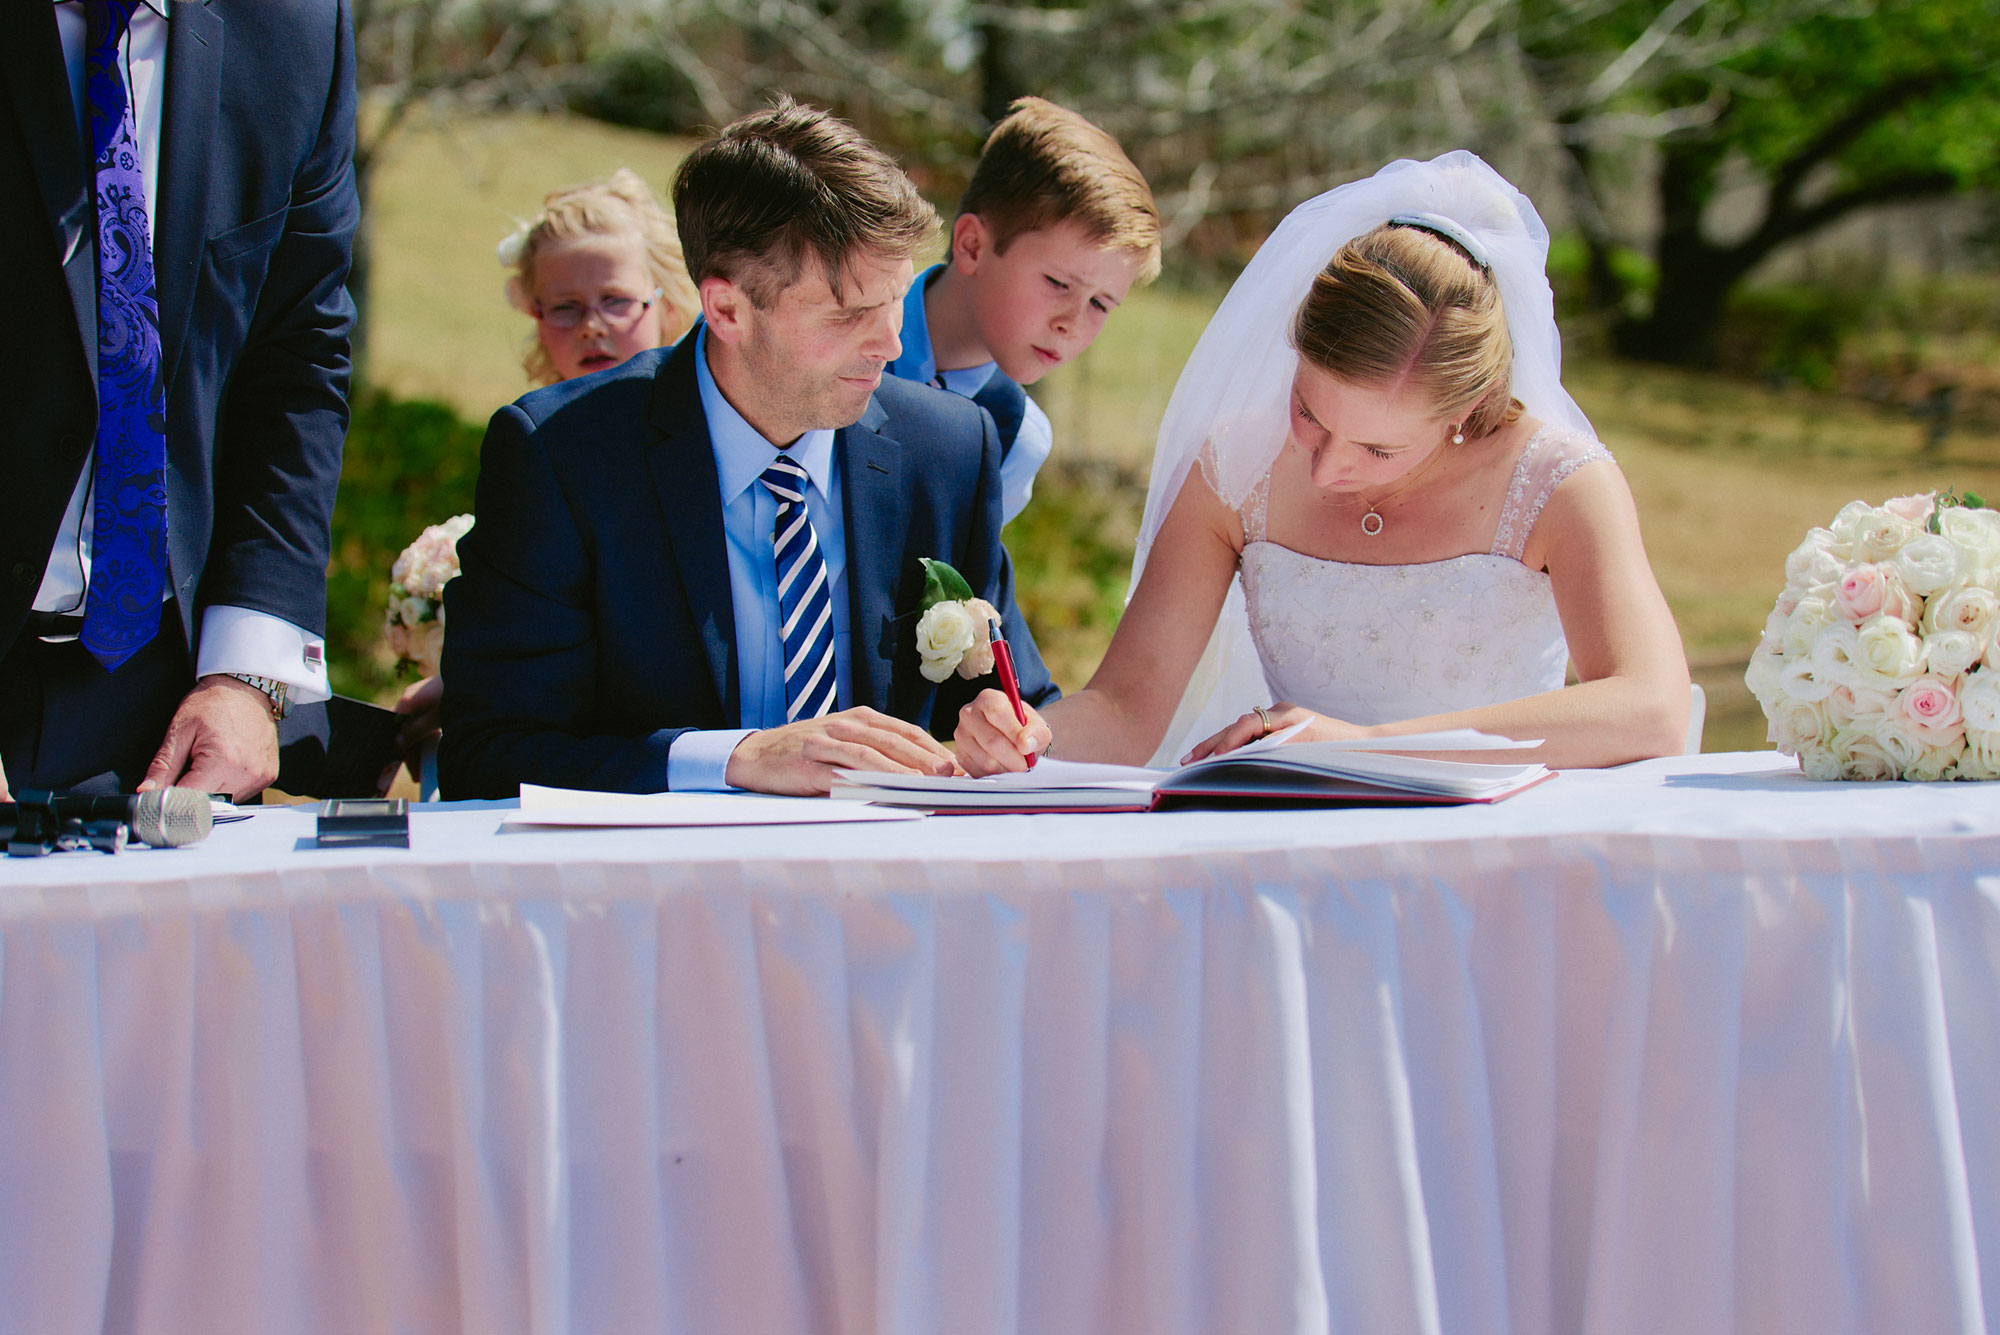 Signing the wedding register